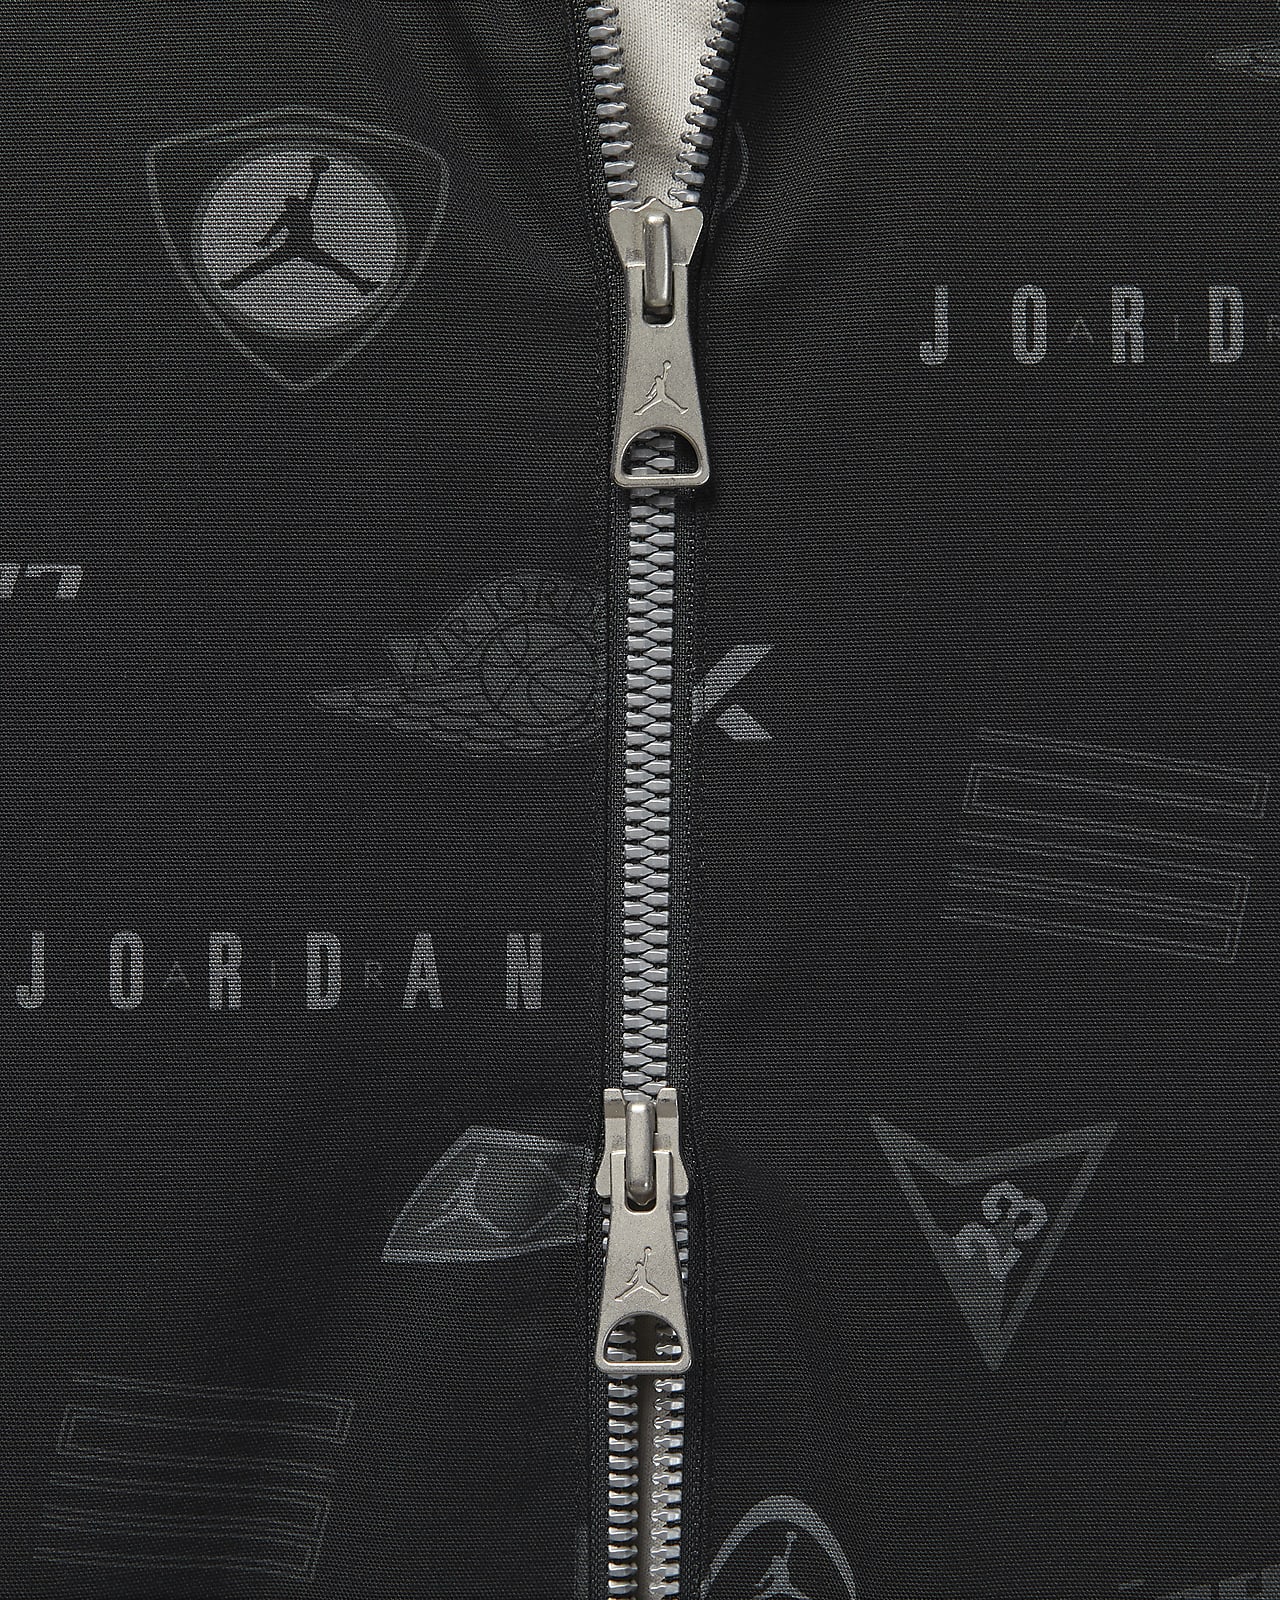 Air Jordan #23 Long Sleeve T-Shirt Black & Silver Size Small Shirt